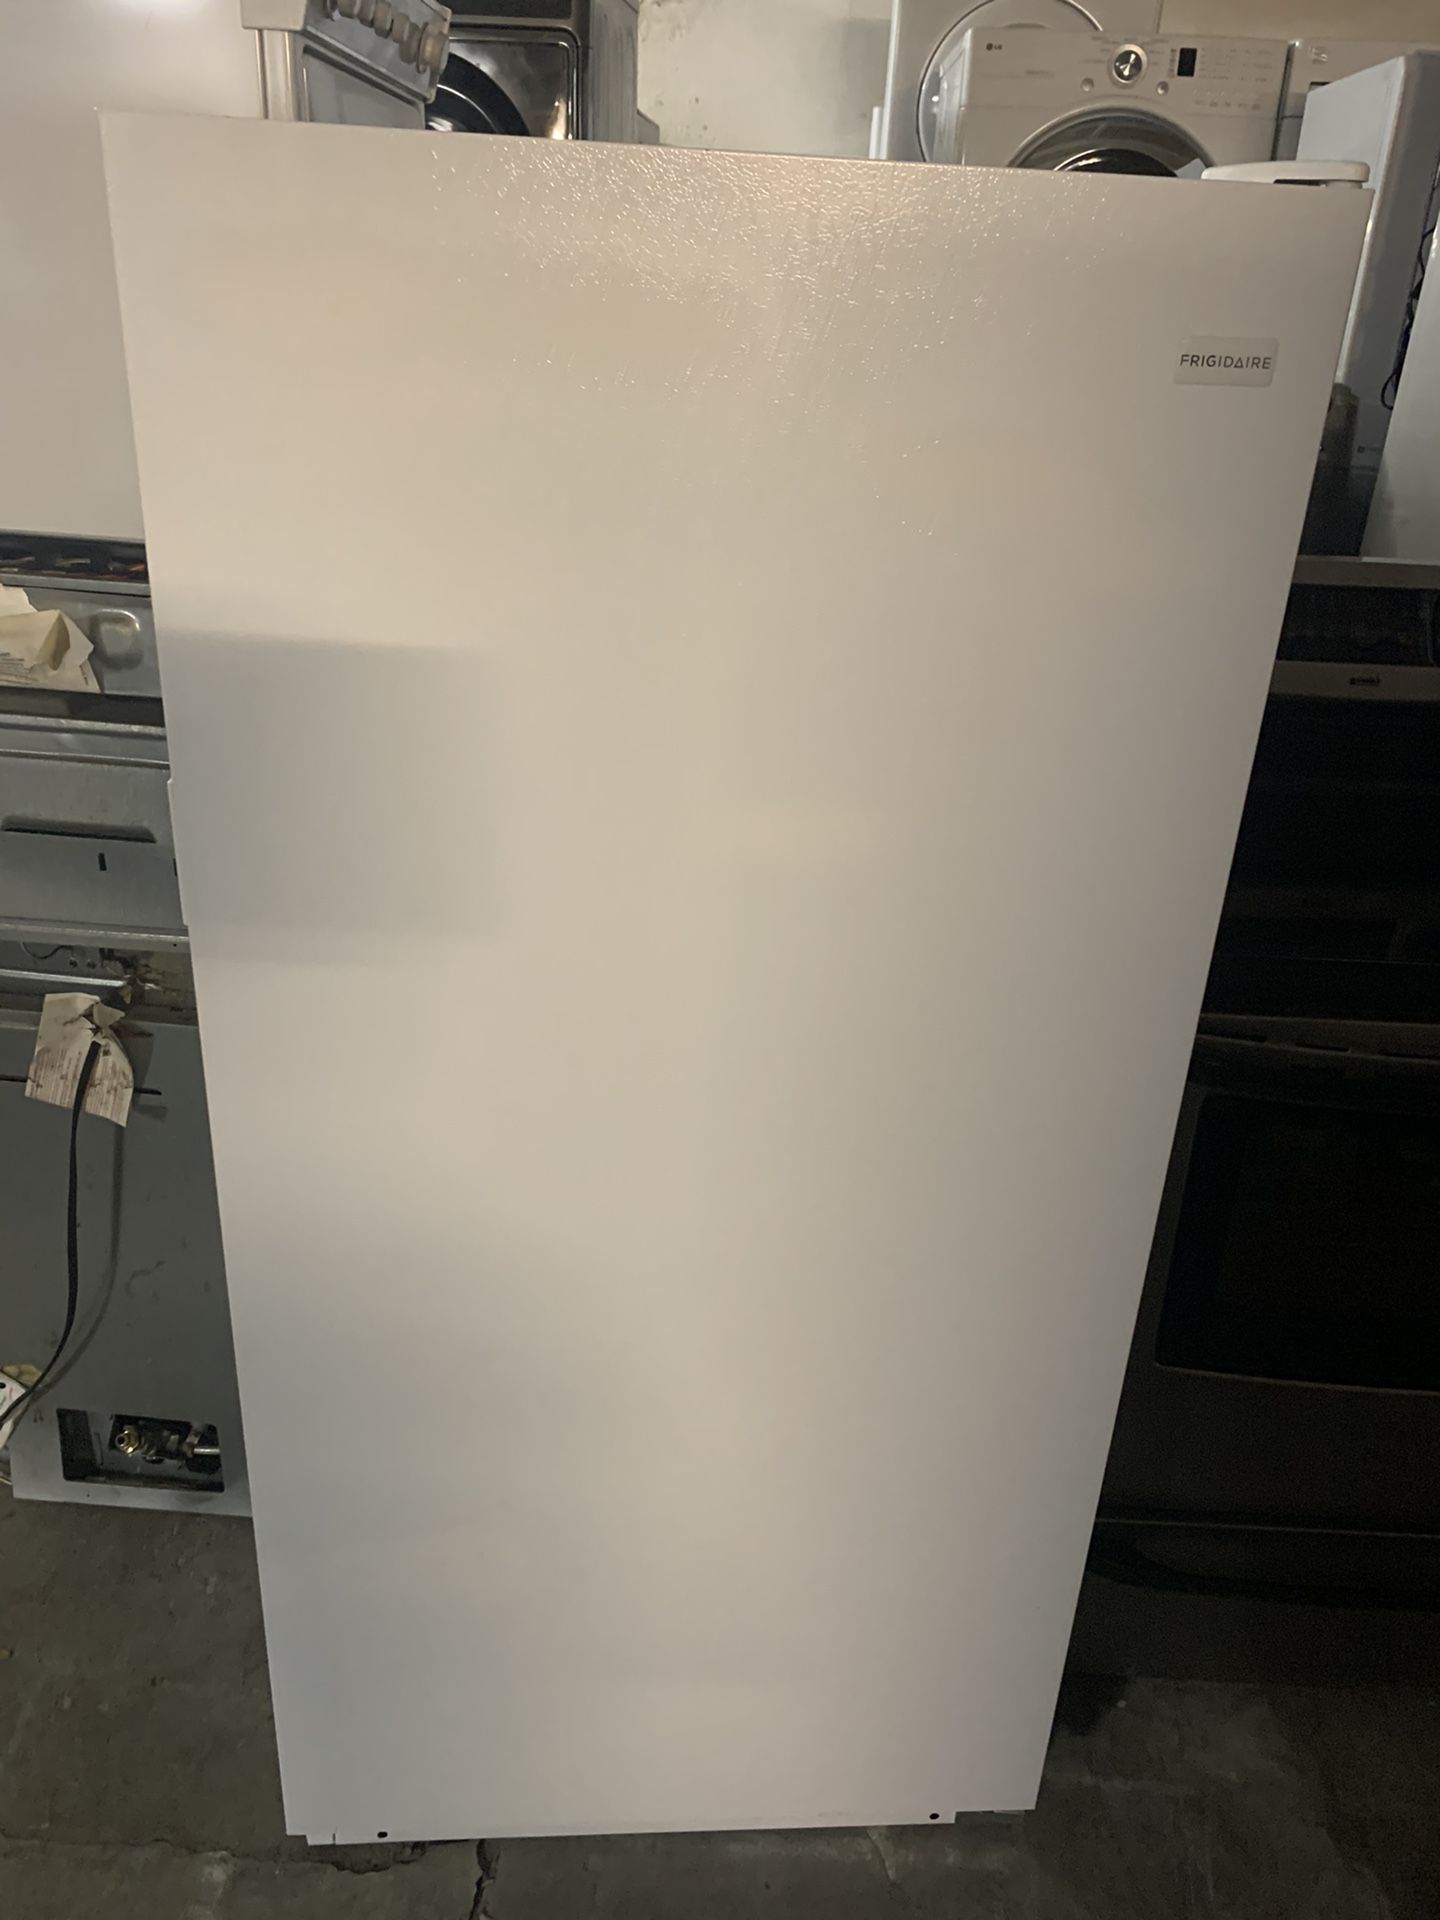 One door freezer brand Frigidaire everything is good working condition 60 days warranty